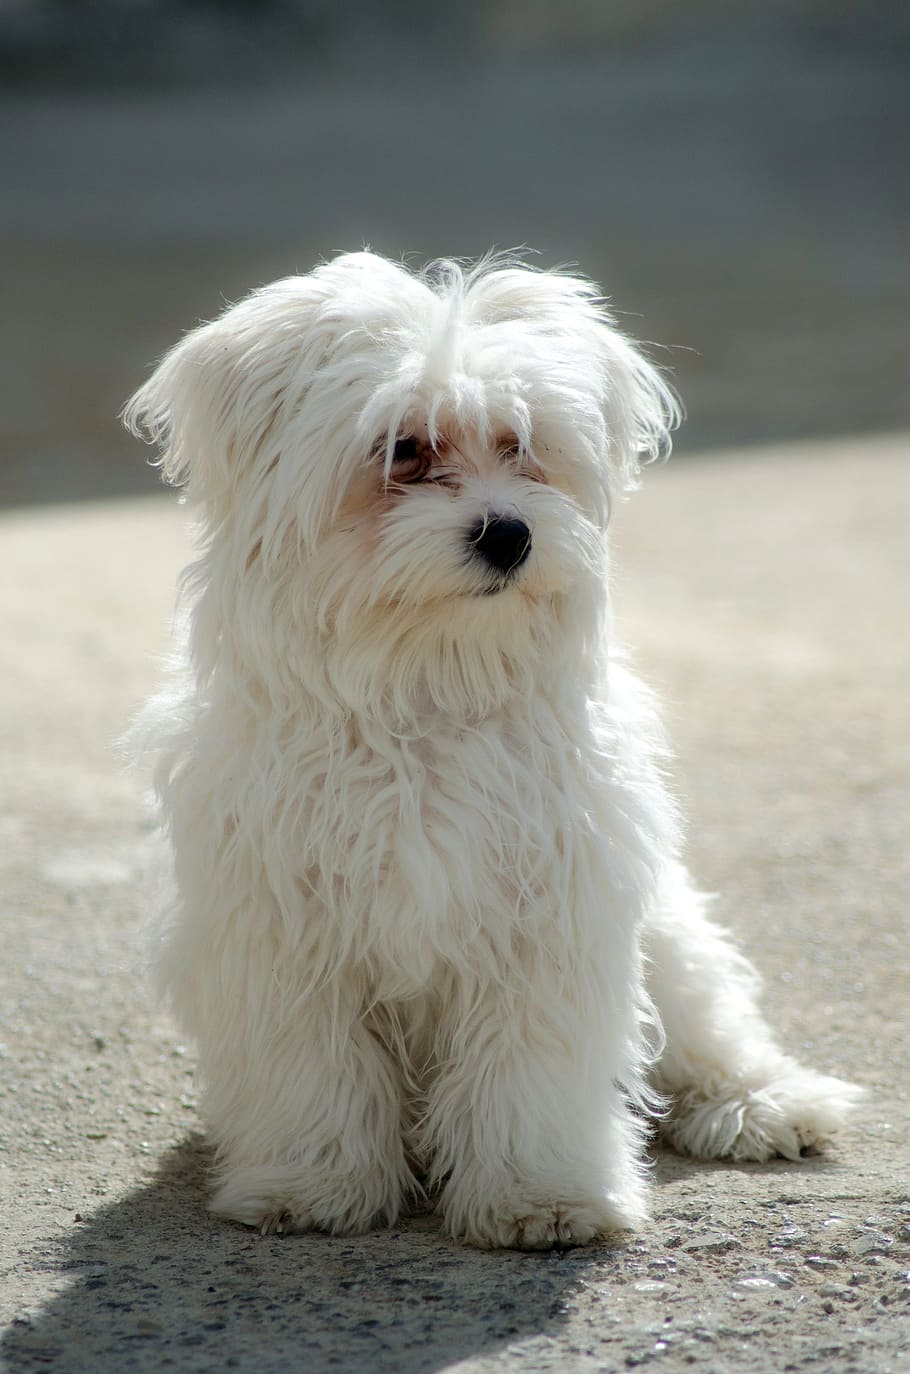 white, havanese puppy, sitting, gray, ground close-up photography, dog, maltese, pet, puppy, fluffy